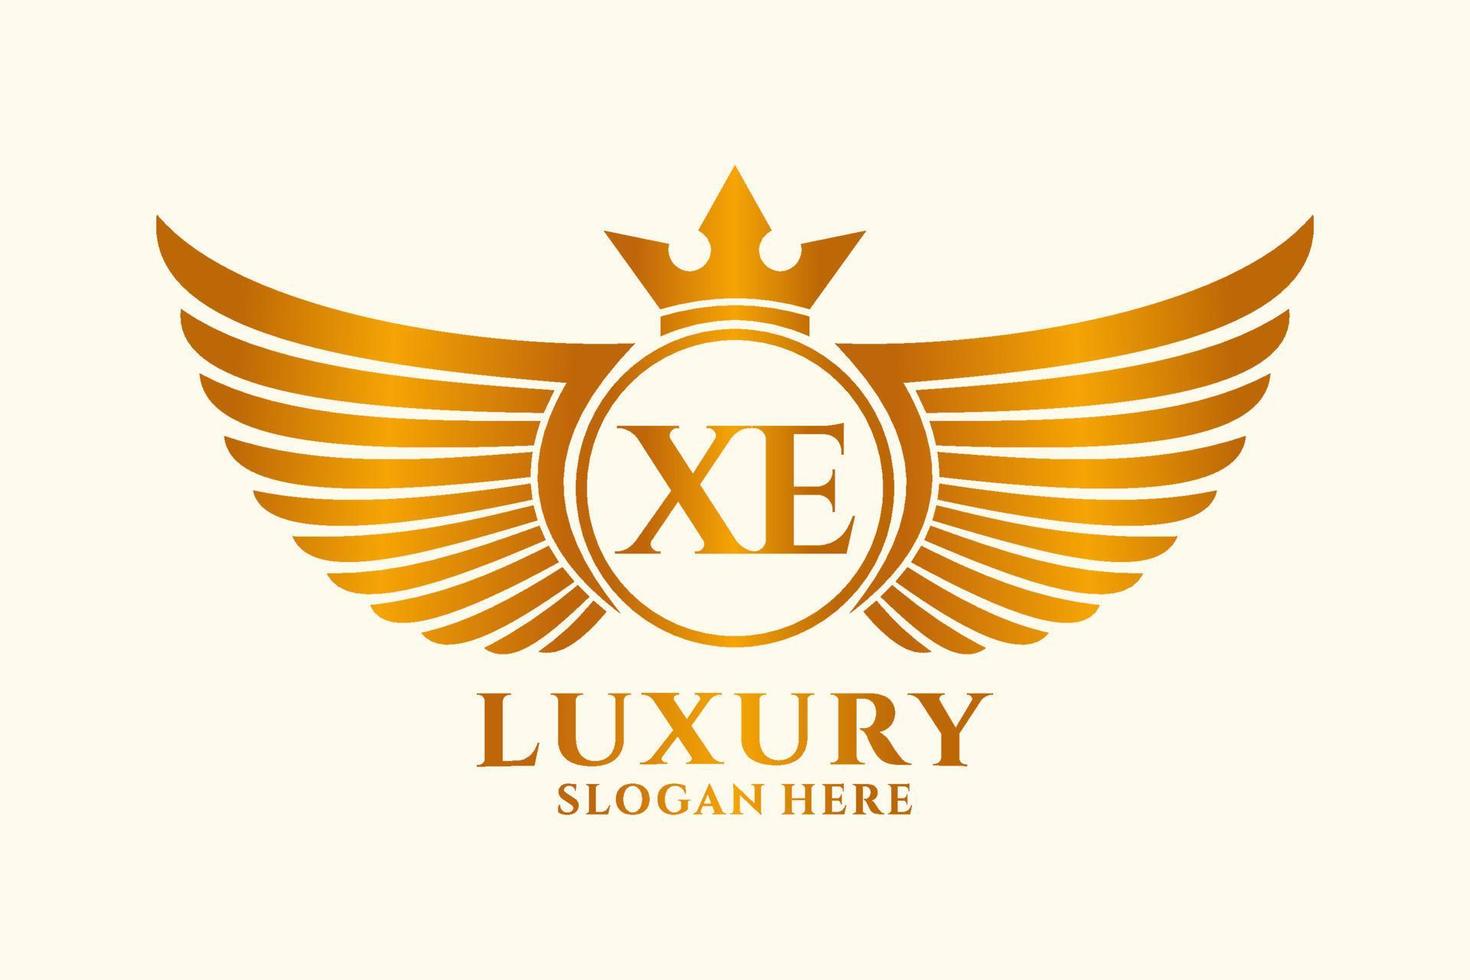 luxe Koninklijk vleugel brief xe kam goud kleur logo vector, zege logo, kam logo, vleugel logo, vector logo sjabloon.